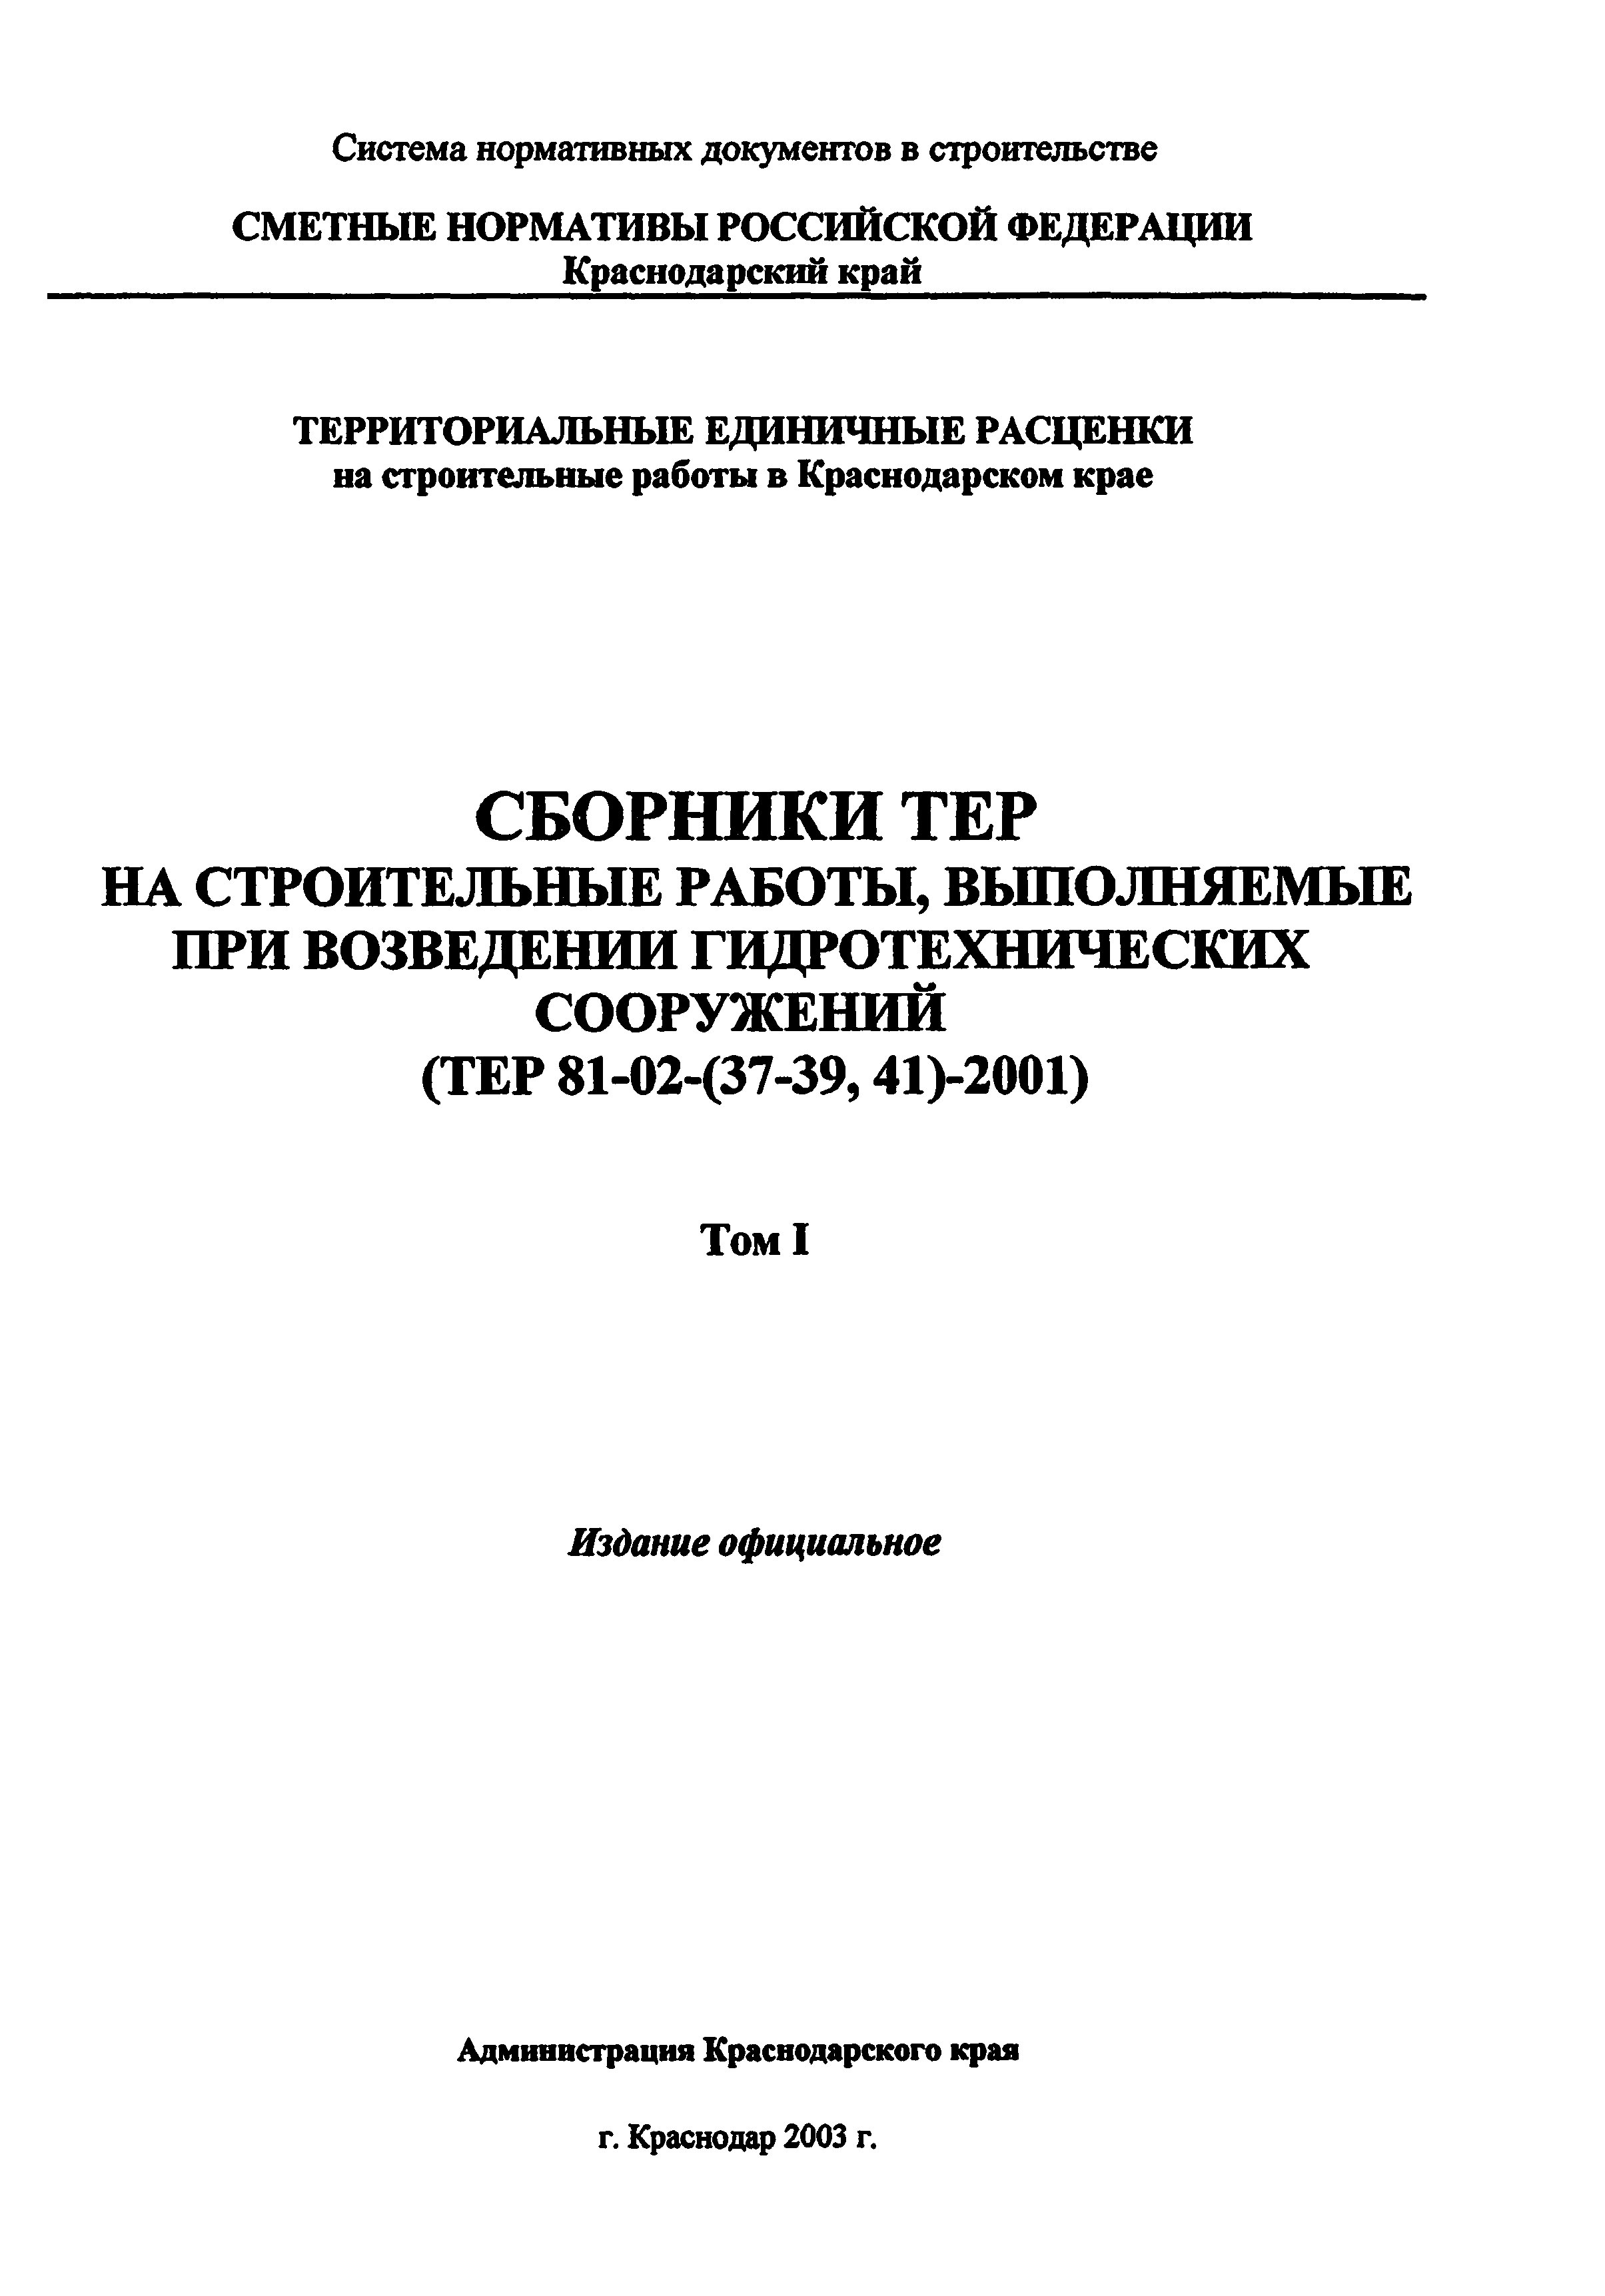 ТЕР Краснодарский край 2001-38